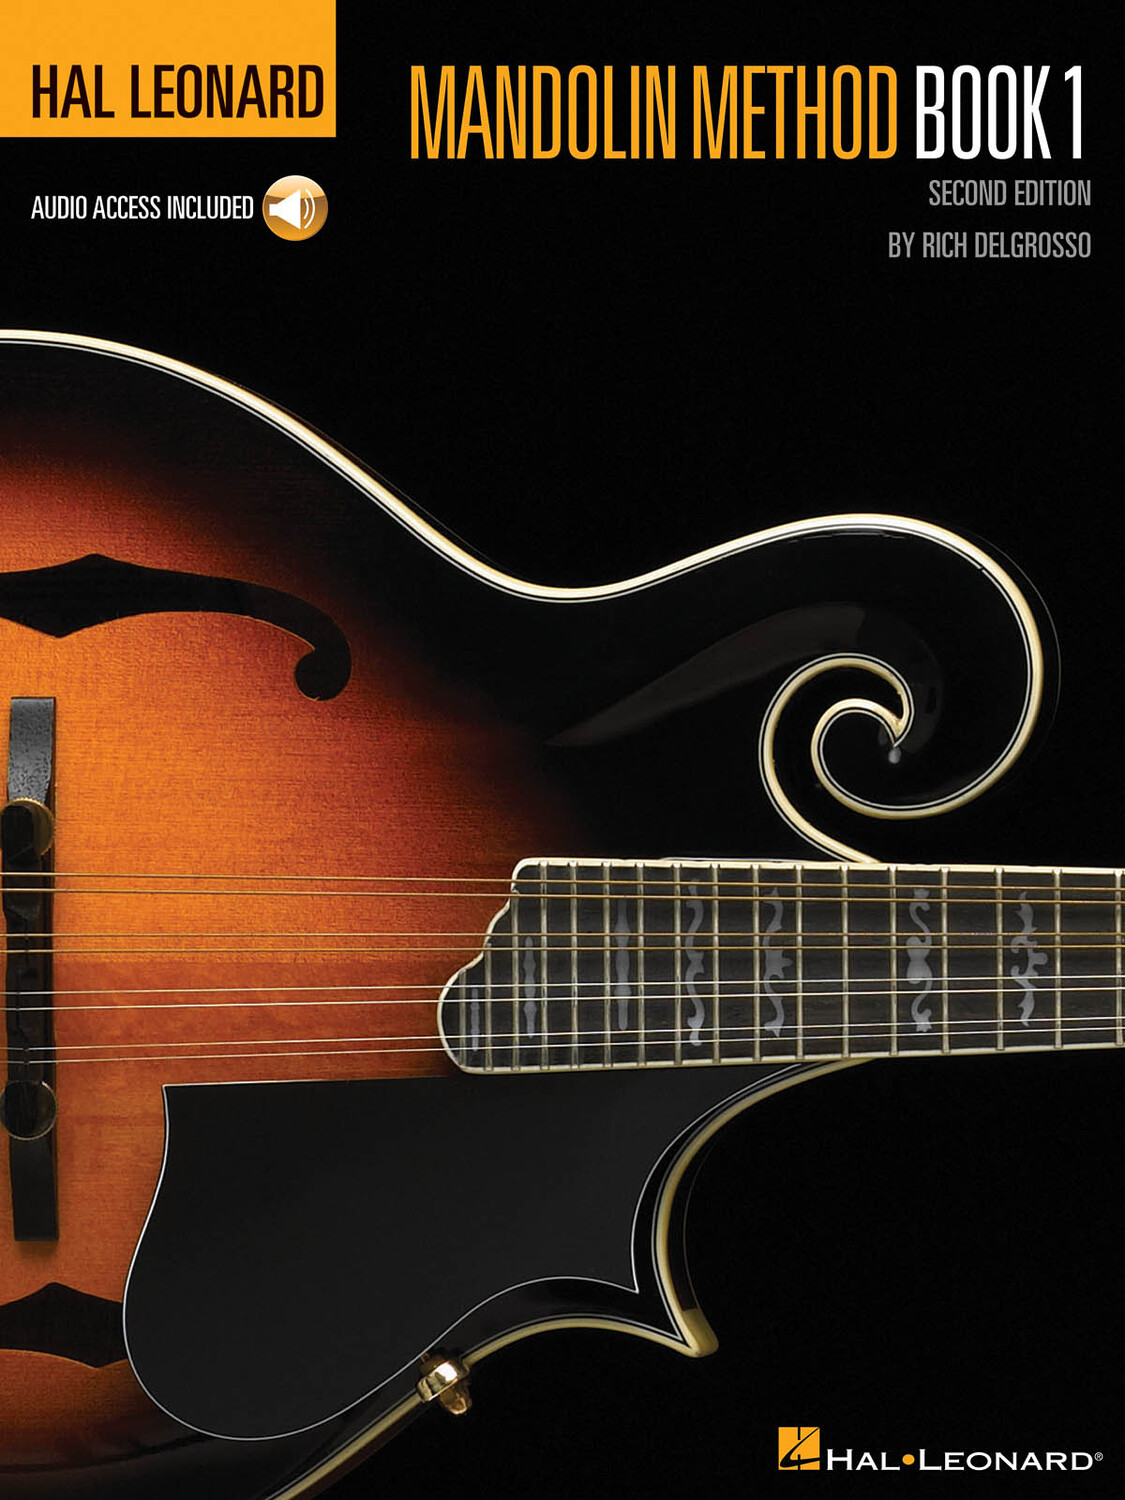 Cover: 73999951028 | Hal Leonard Mandolin Method | Second Edition | Rich DelGrosso | 1992